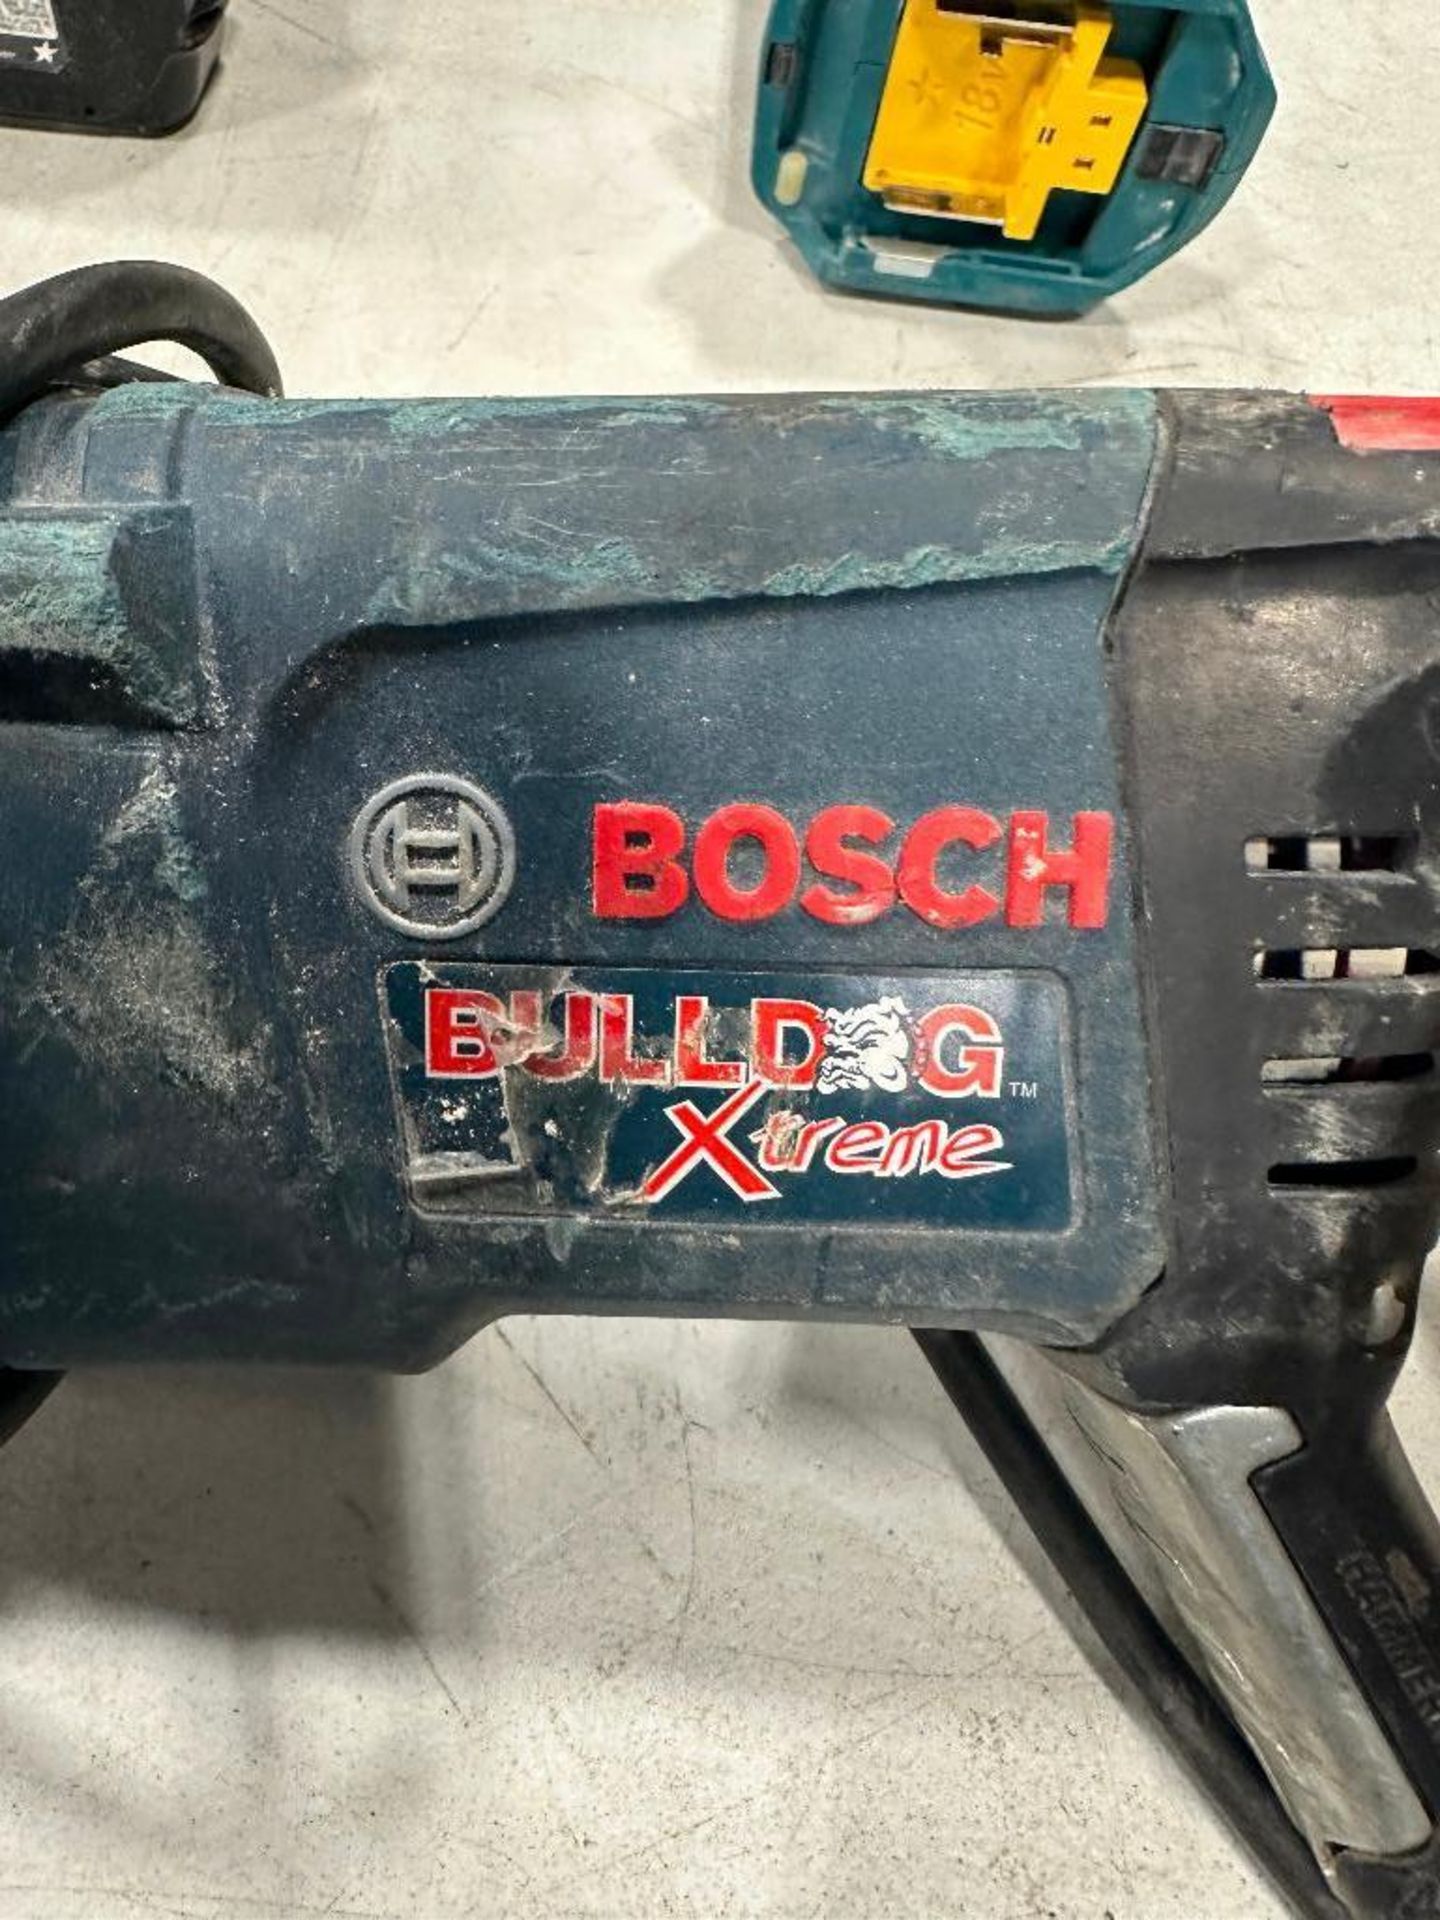 Bosch Bulldog Xtreme Hammer Drill - Image 5 of 5